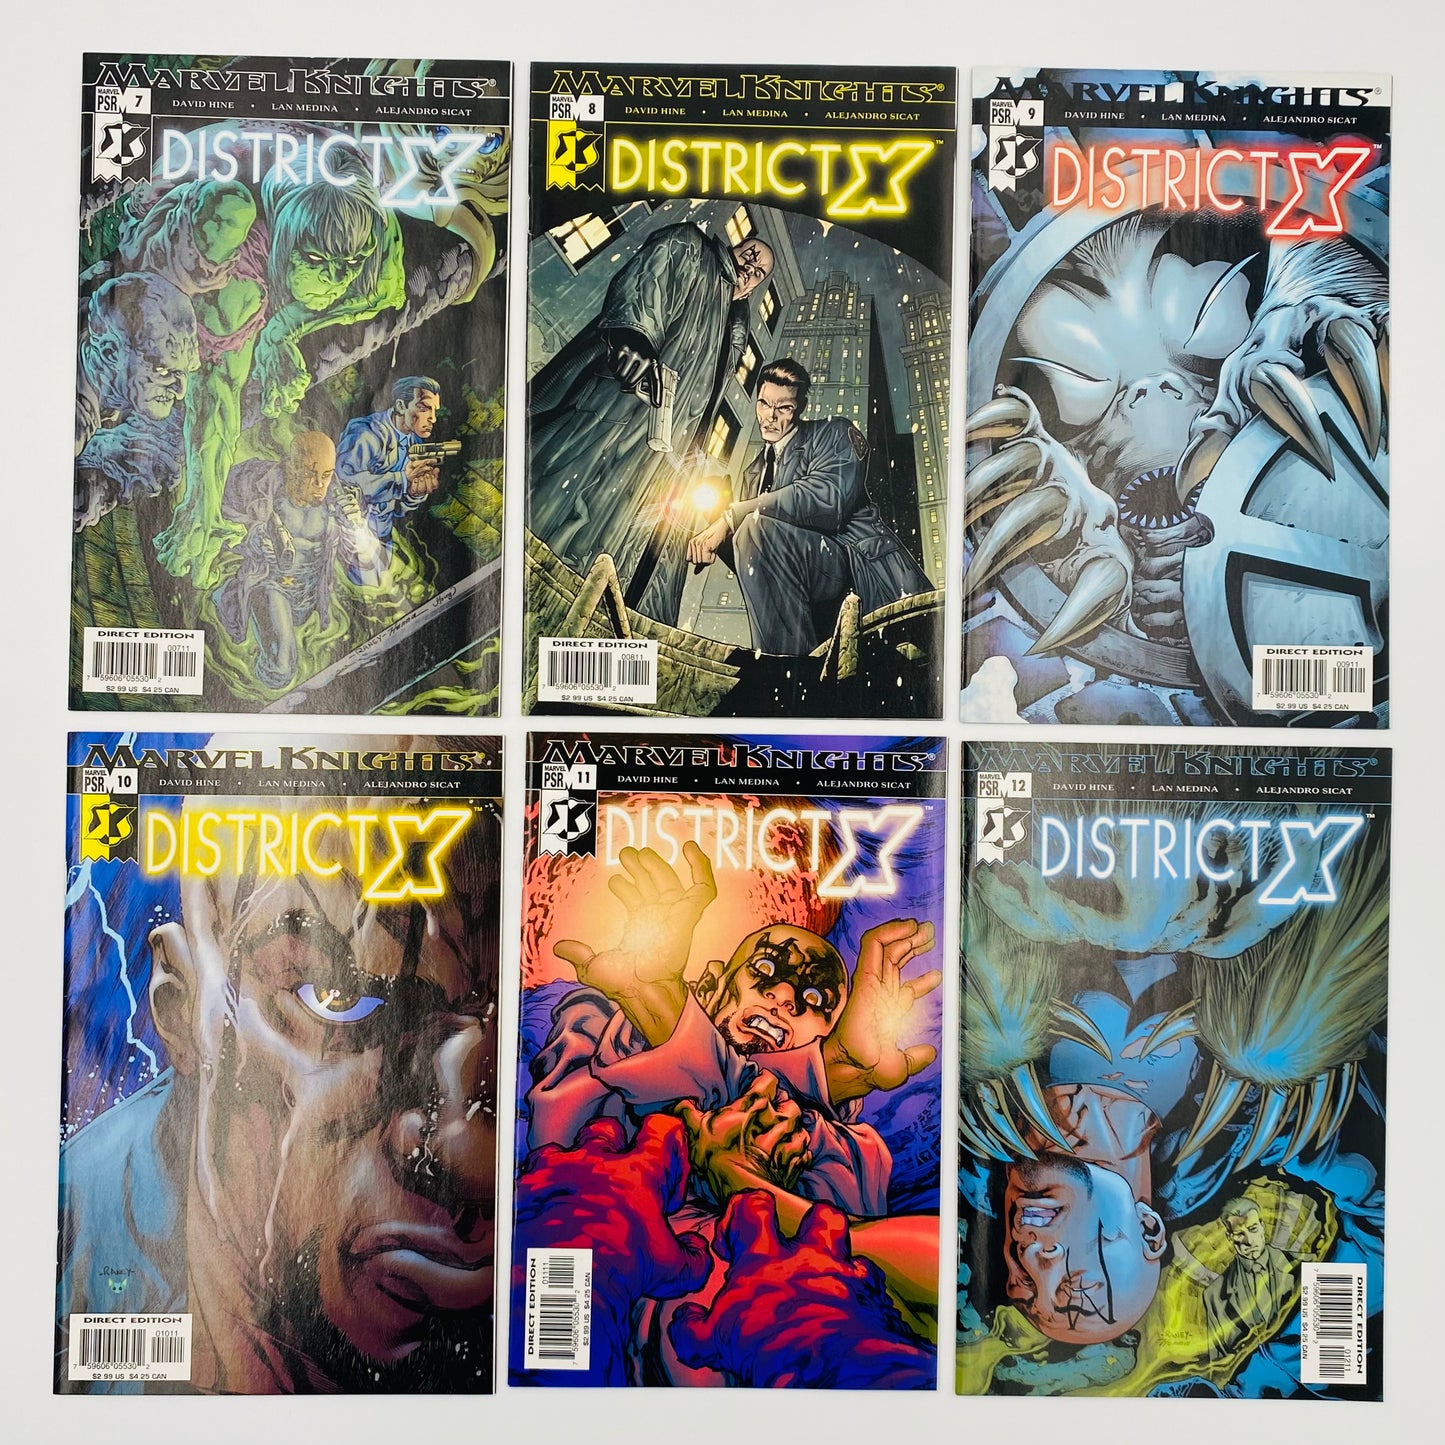 District X #1-14 (2004-2005) Marvel Knights